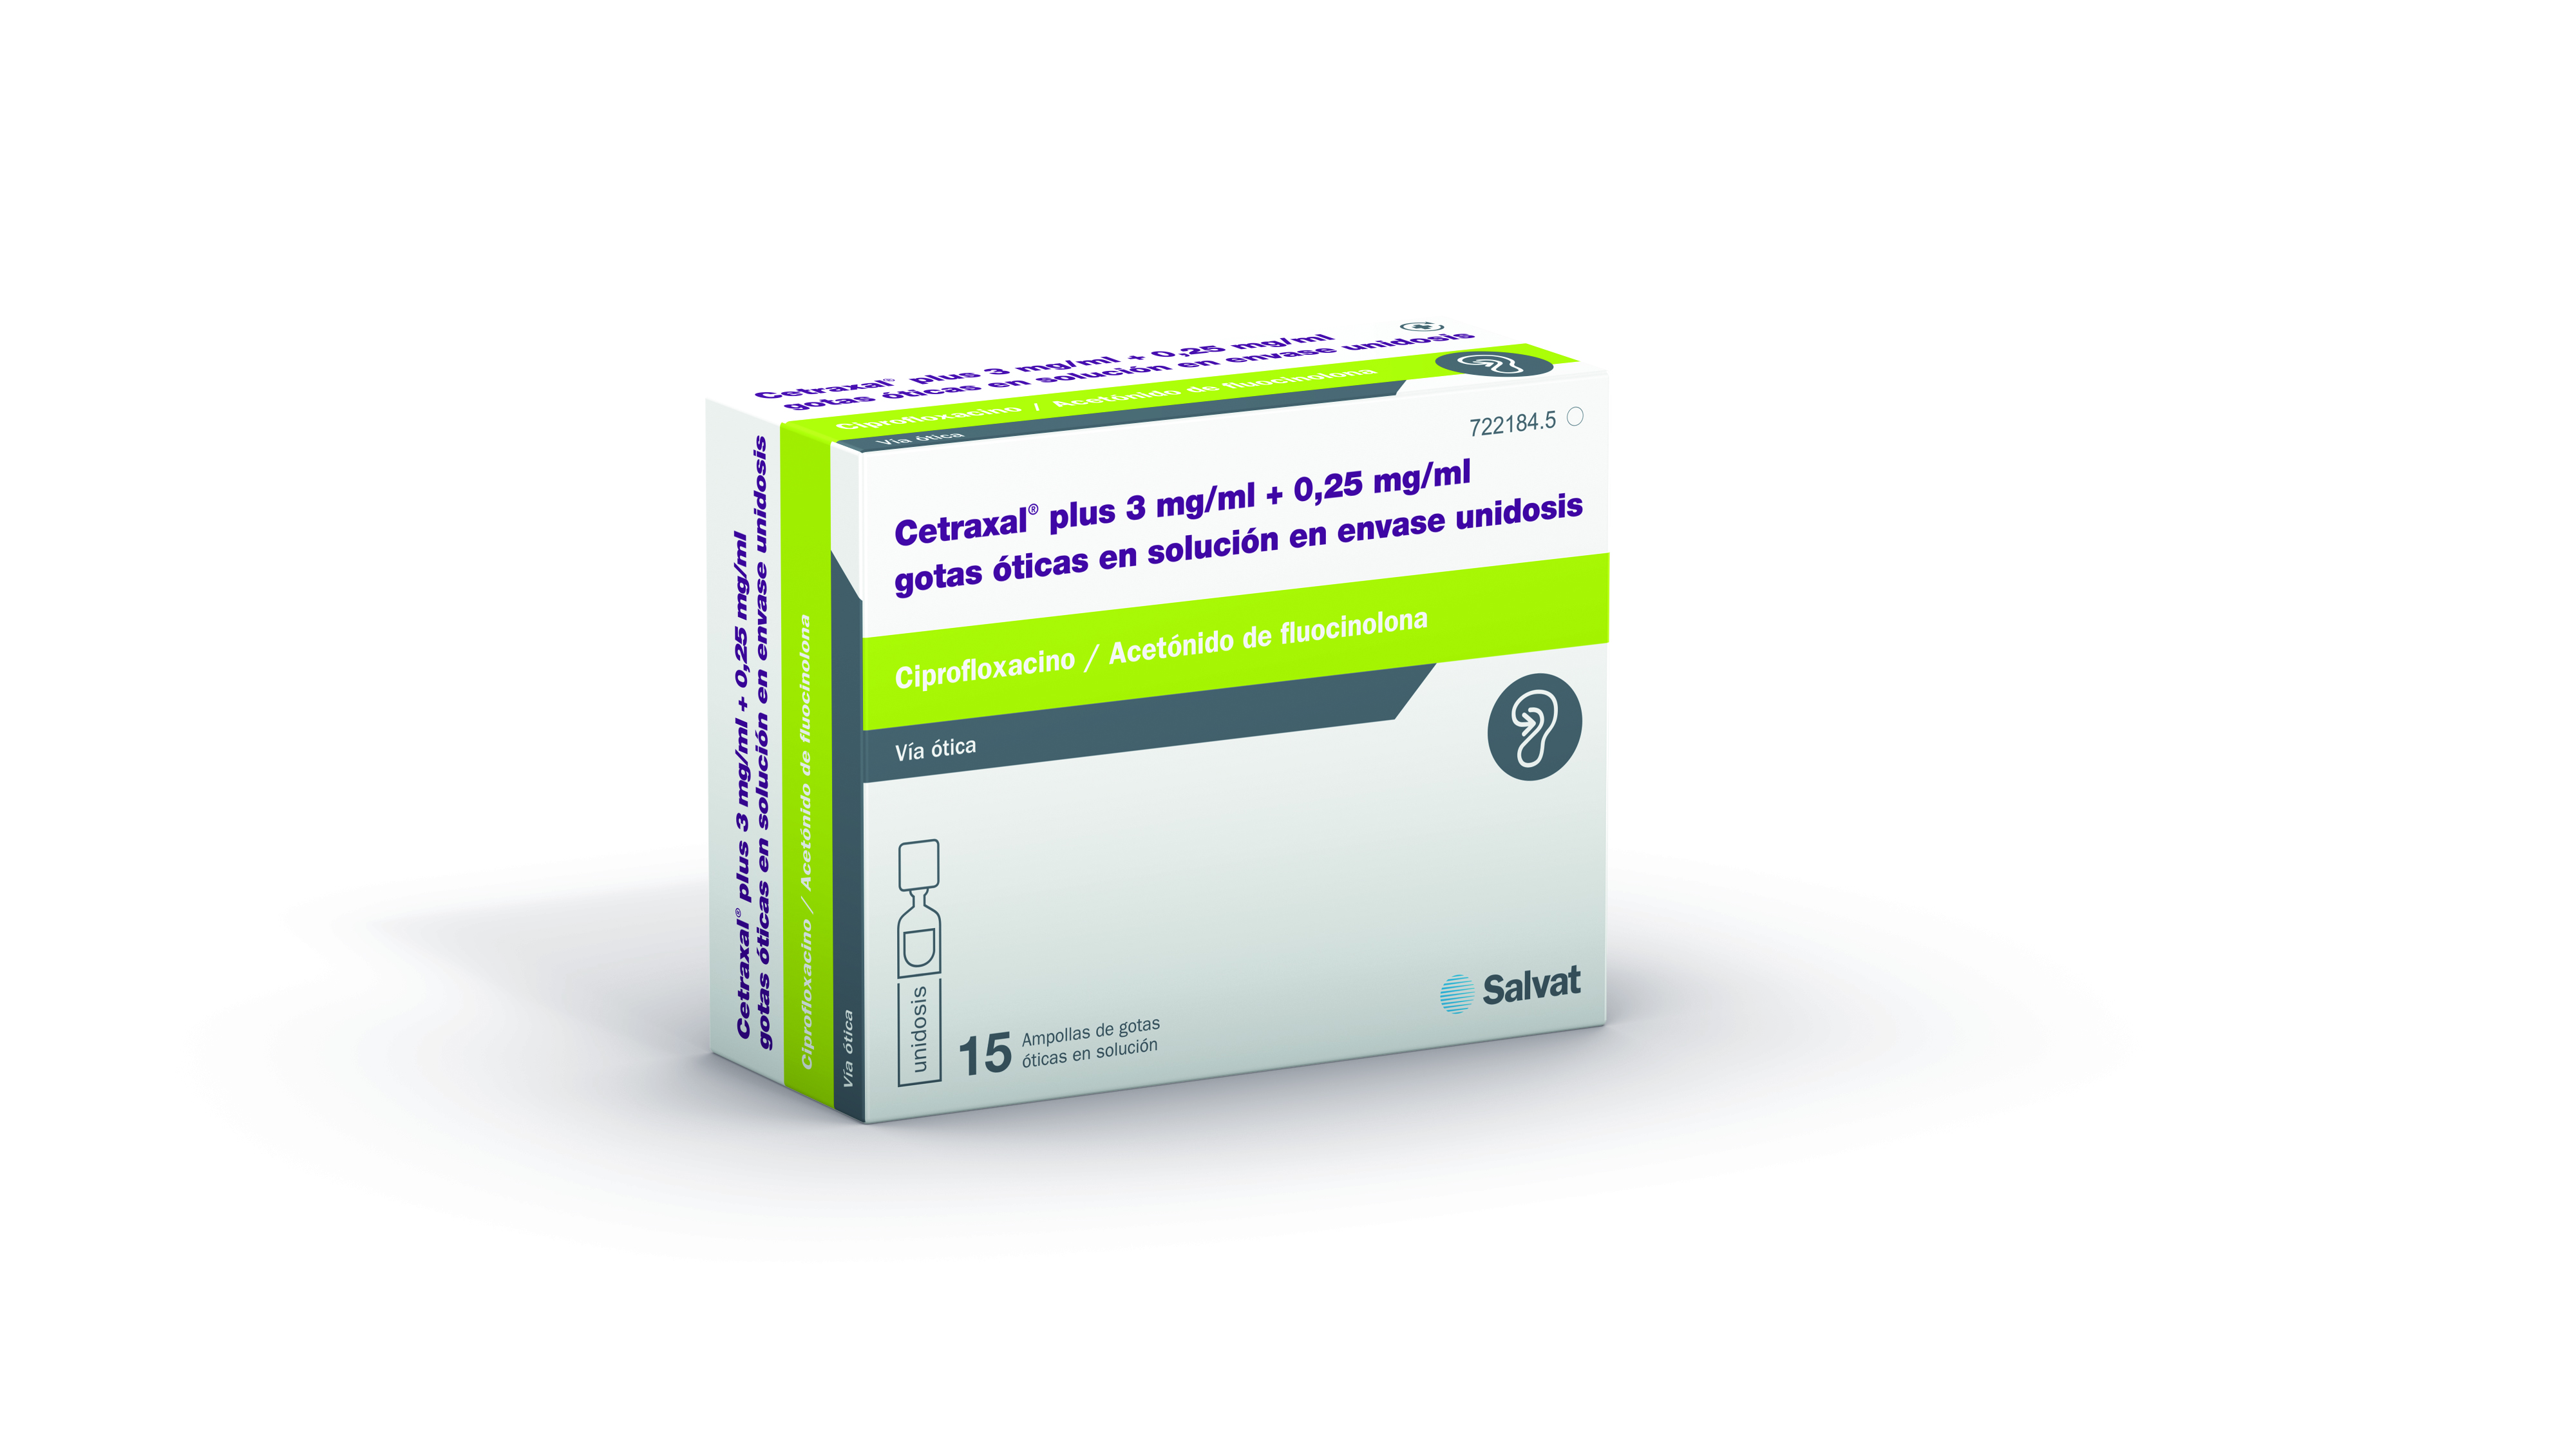 Cetraxal Plus 3mg/ml + 0.25 mg/ml - AOE & AOMT - Otic solution Rx